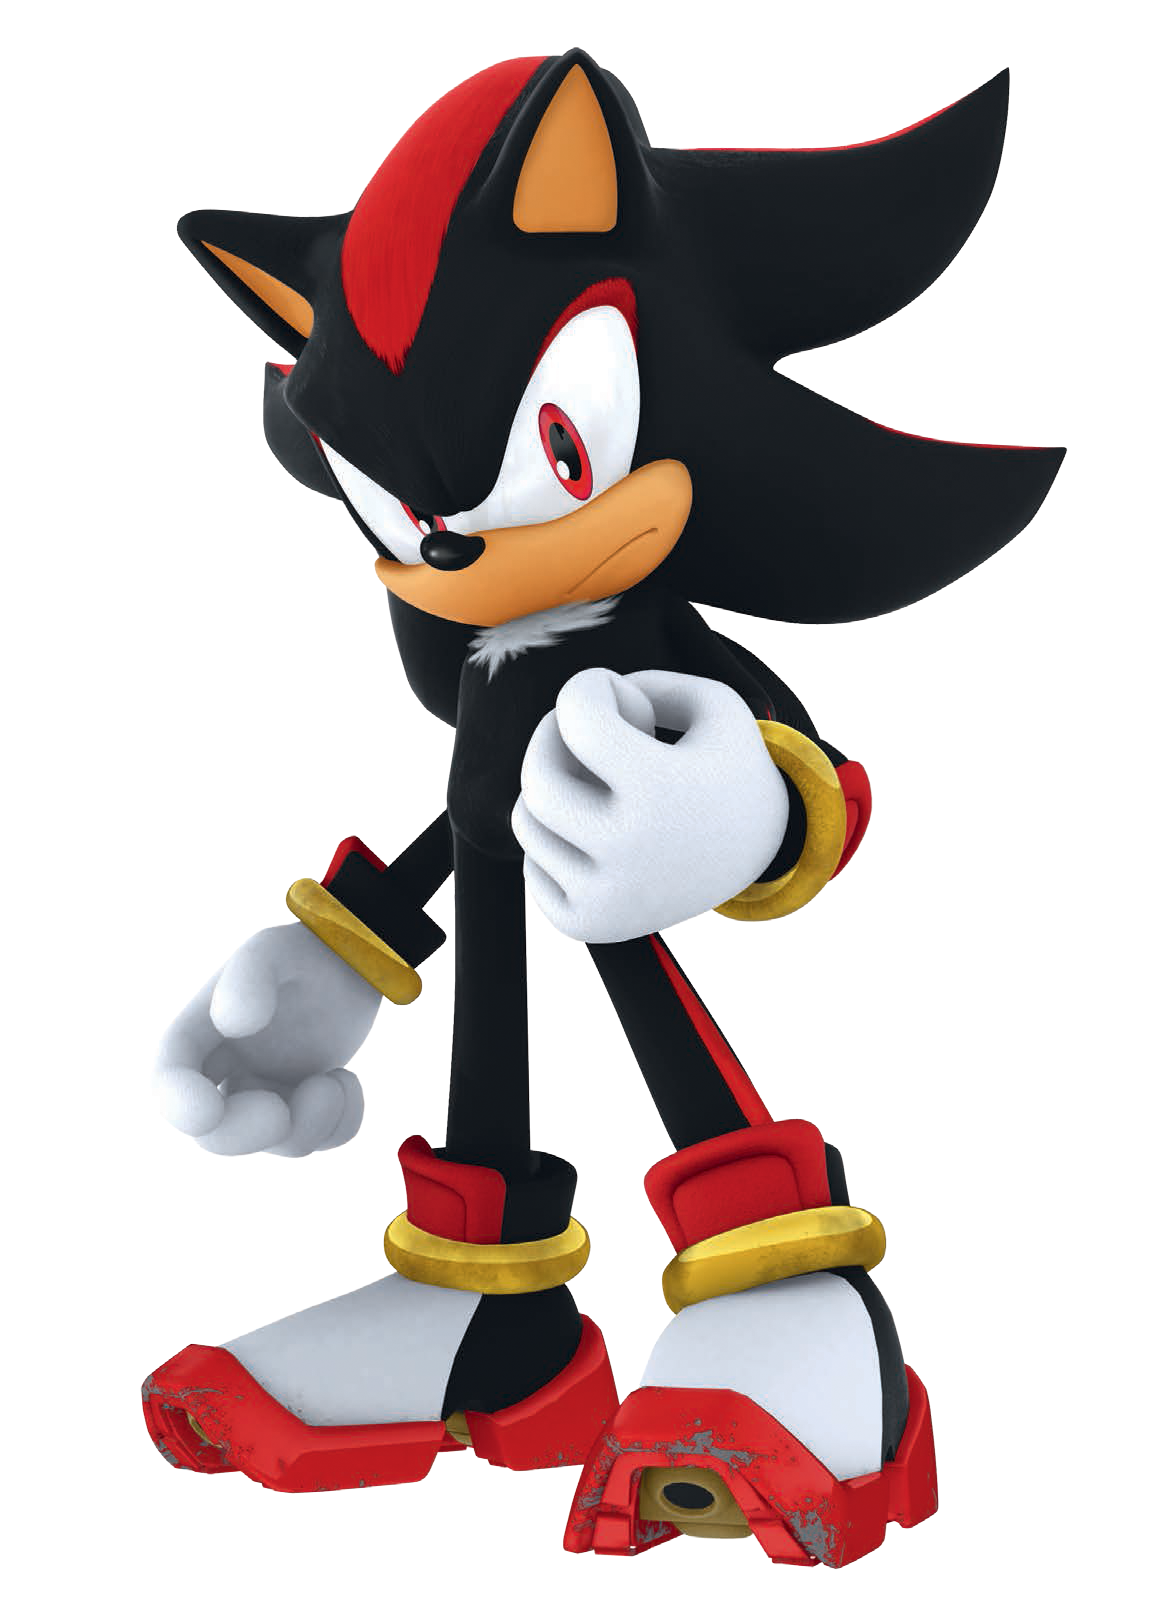 Sonic Adventure - Sonic the Hedgehog - Gallery  Sonic the hedgehog, Sonic  heroes, Sonic adventure